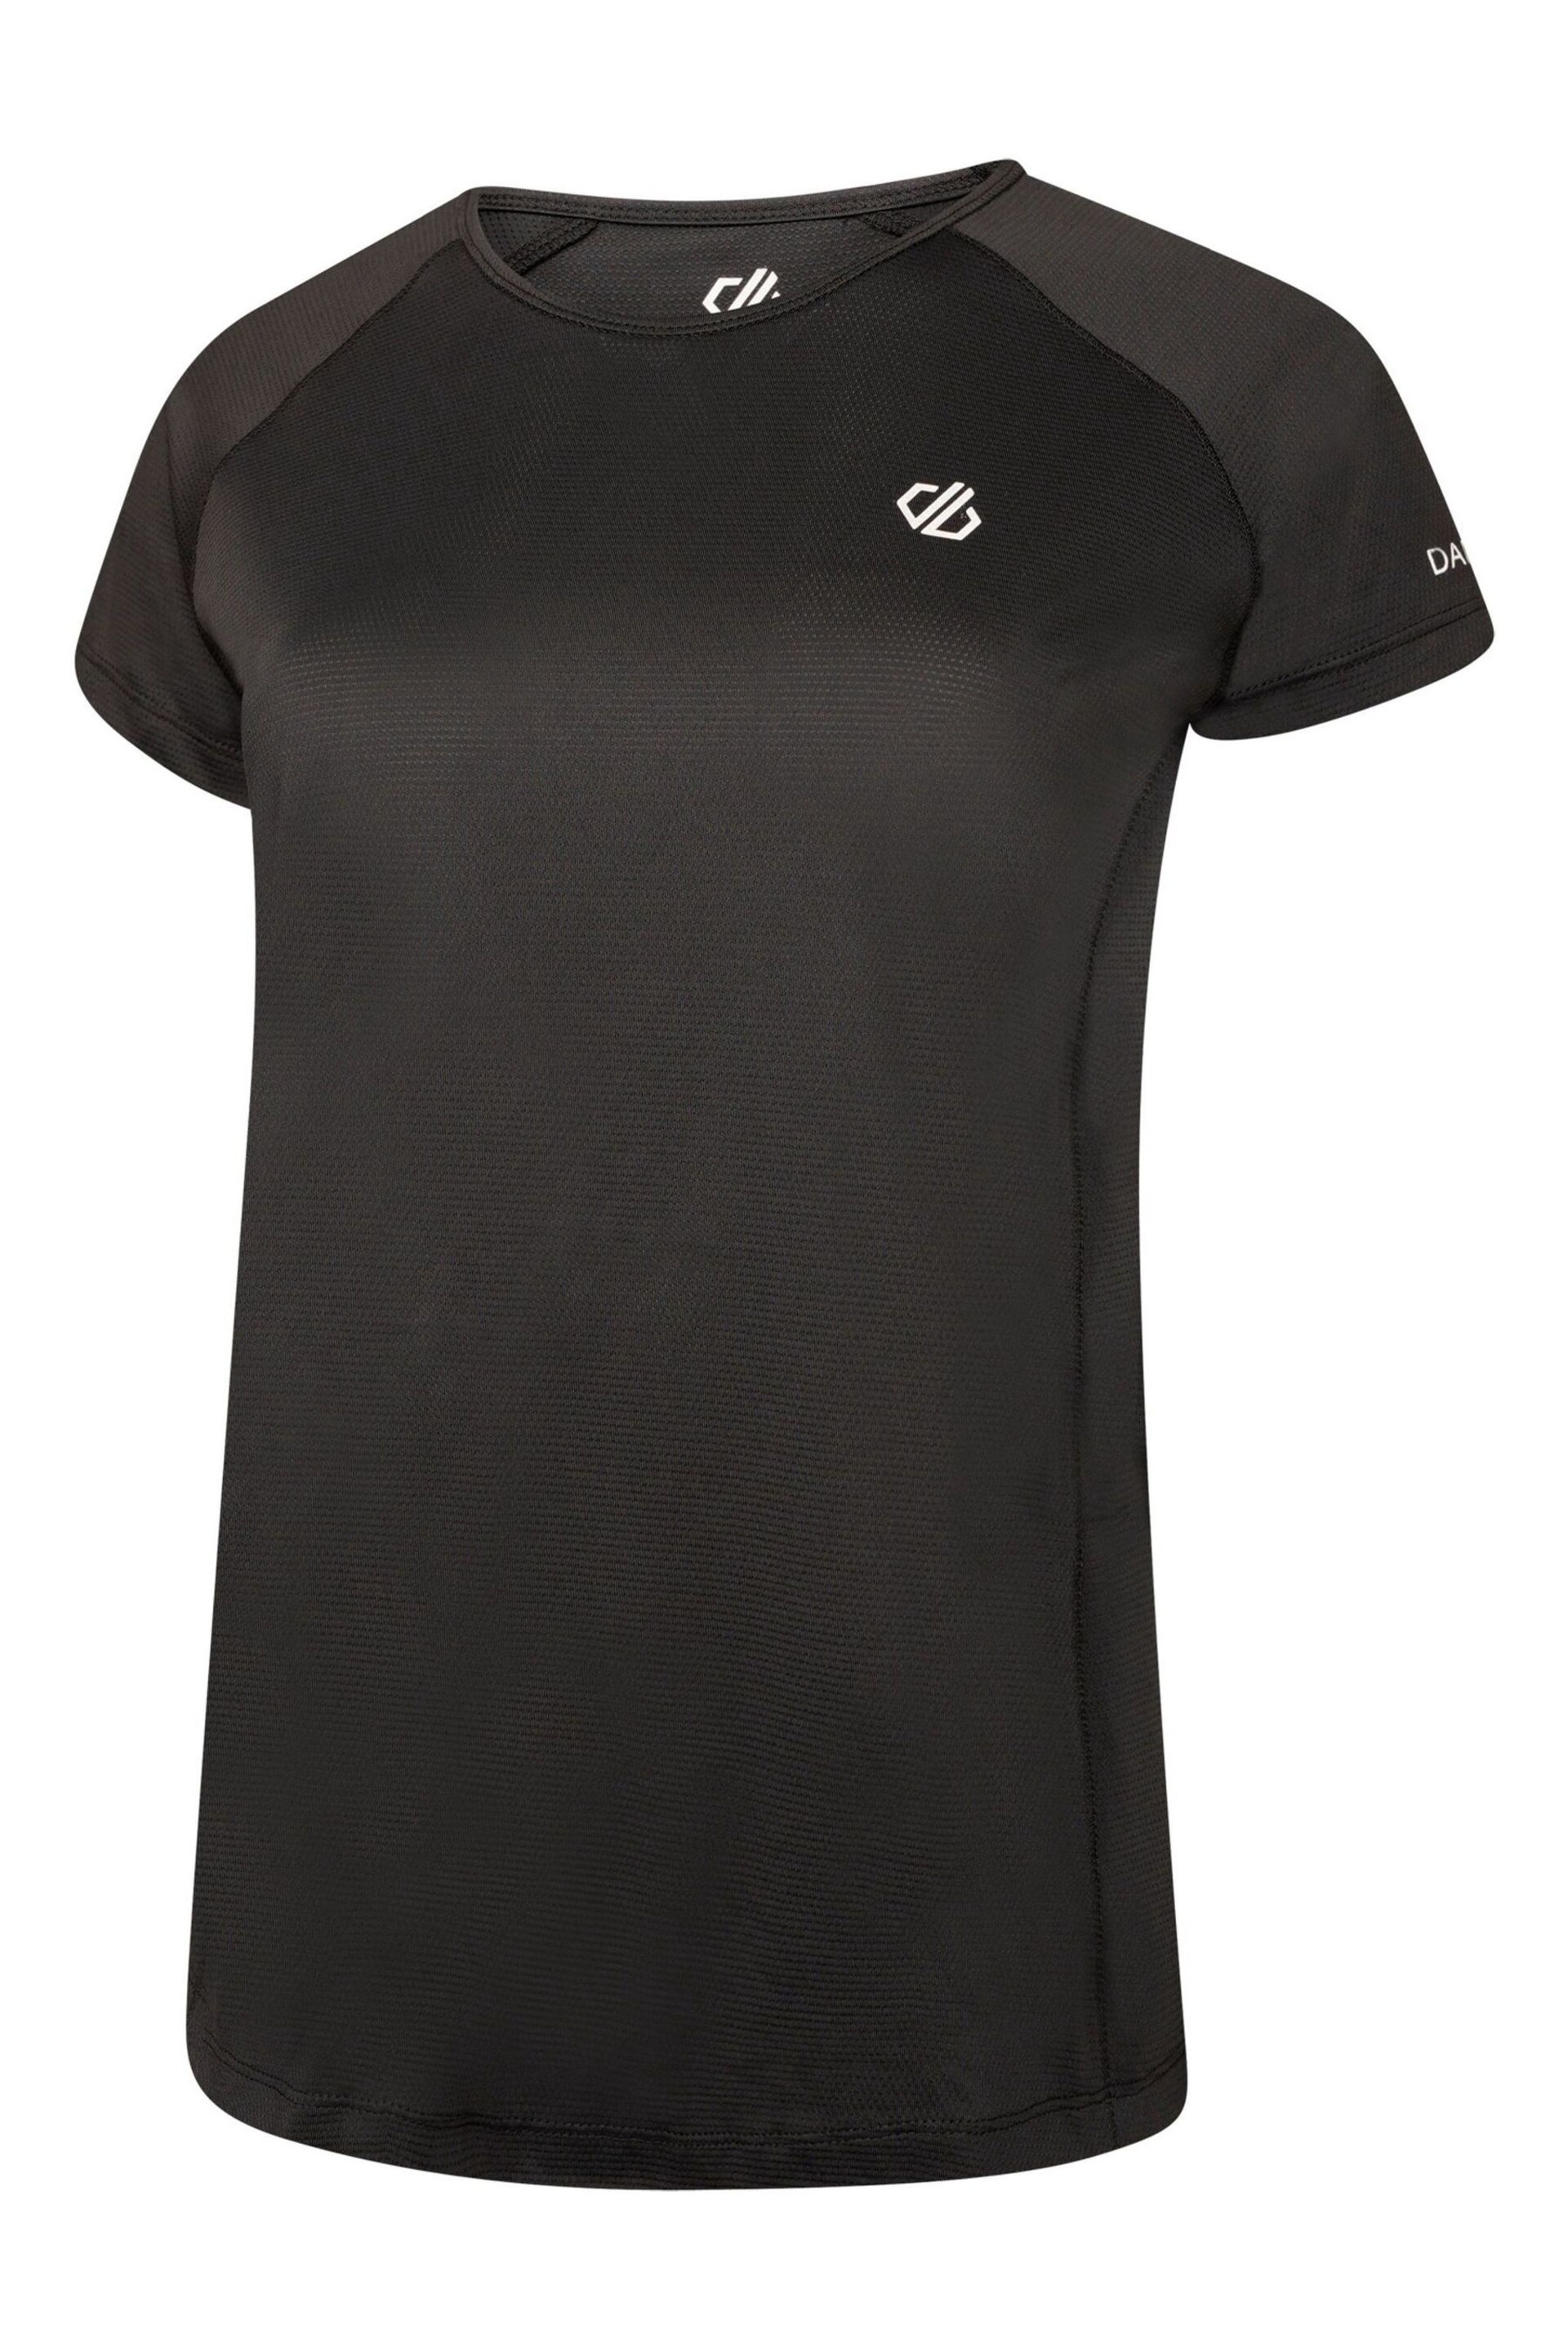 Dare 2b Corral Lightweight Black T-Shirt - Image 5 of 6